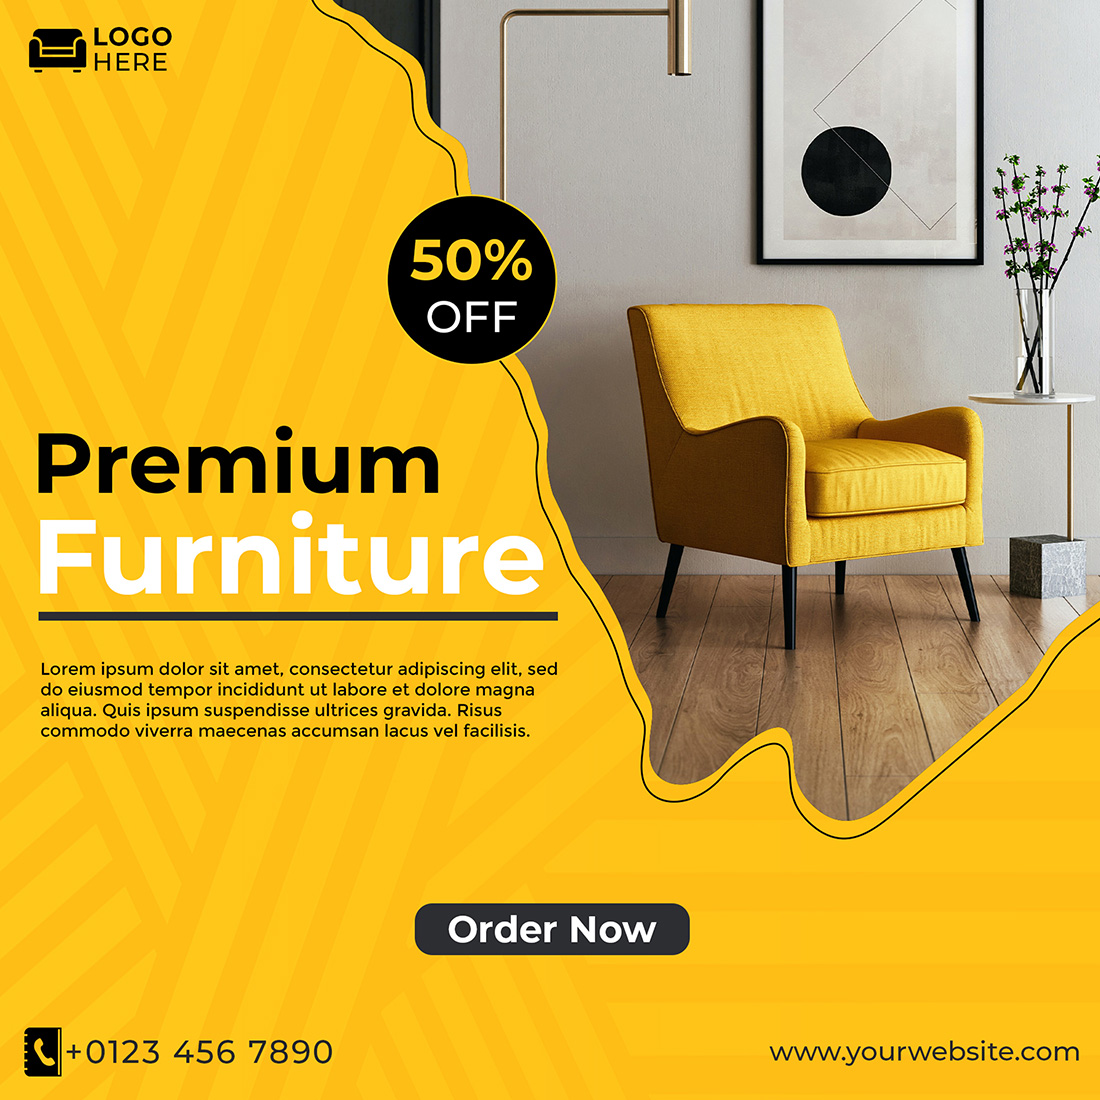 Premium Furniture Sale Instagram Post Template cover image.